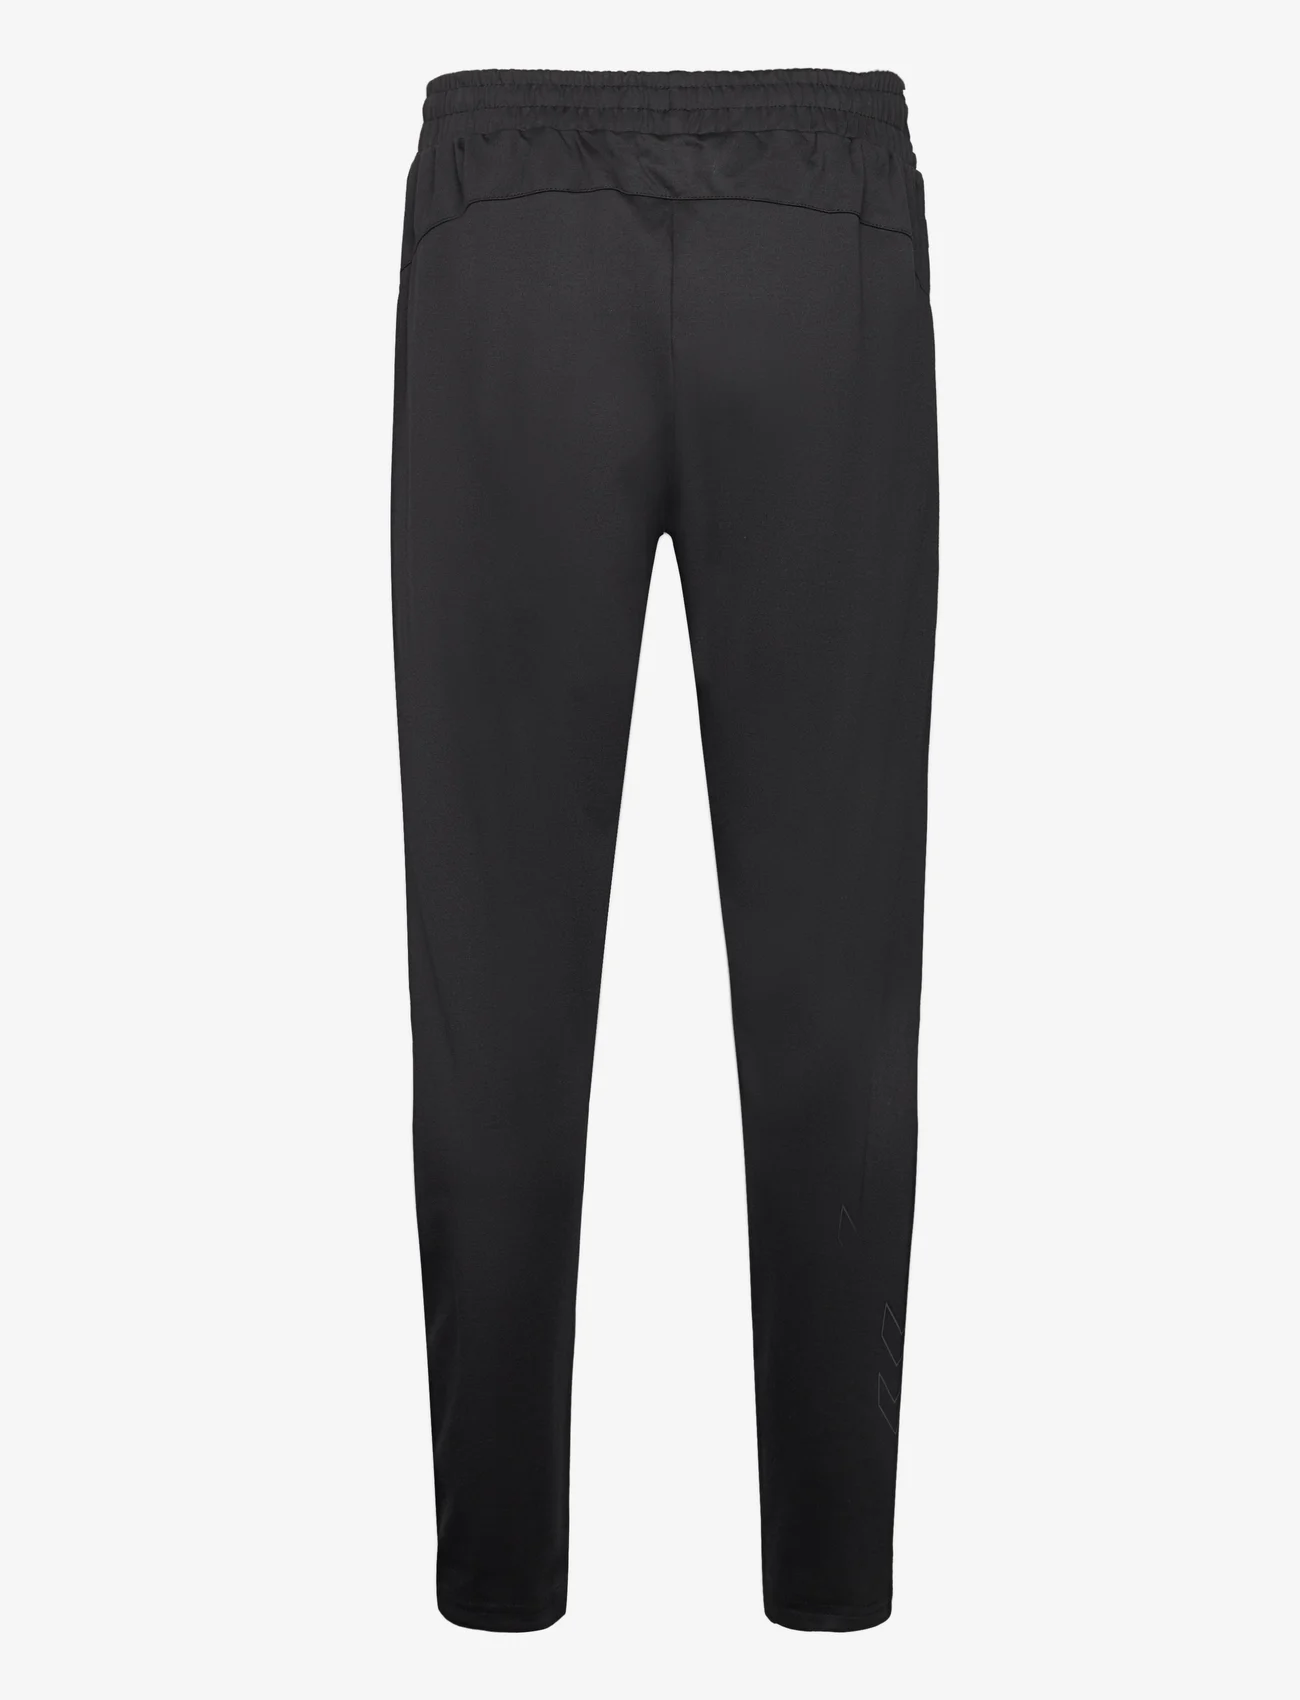 Hummel - hmlMT INTERVAL TAPERED PANTS - sports pants - black - 1